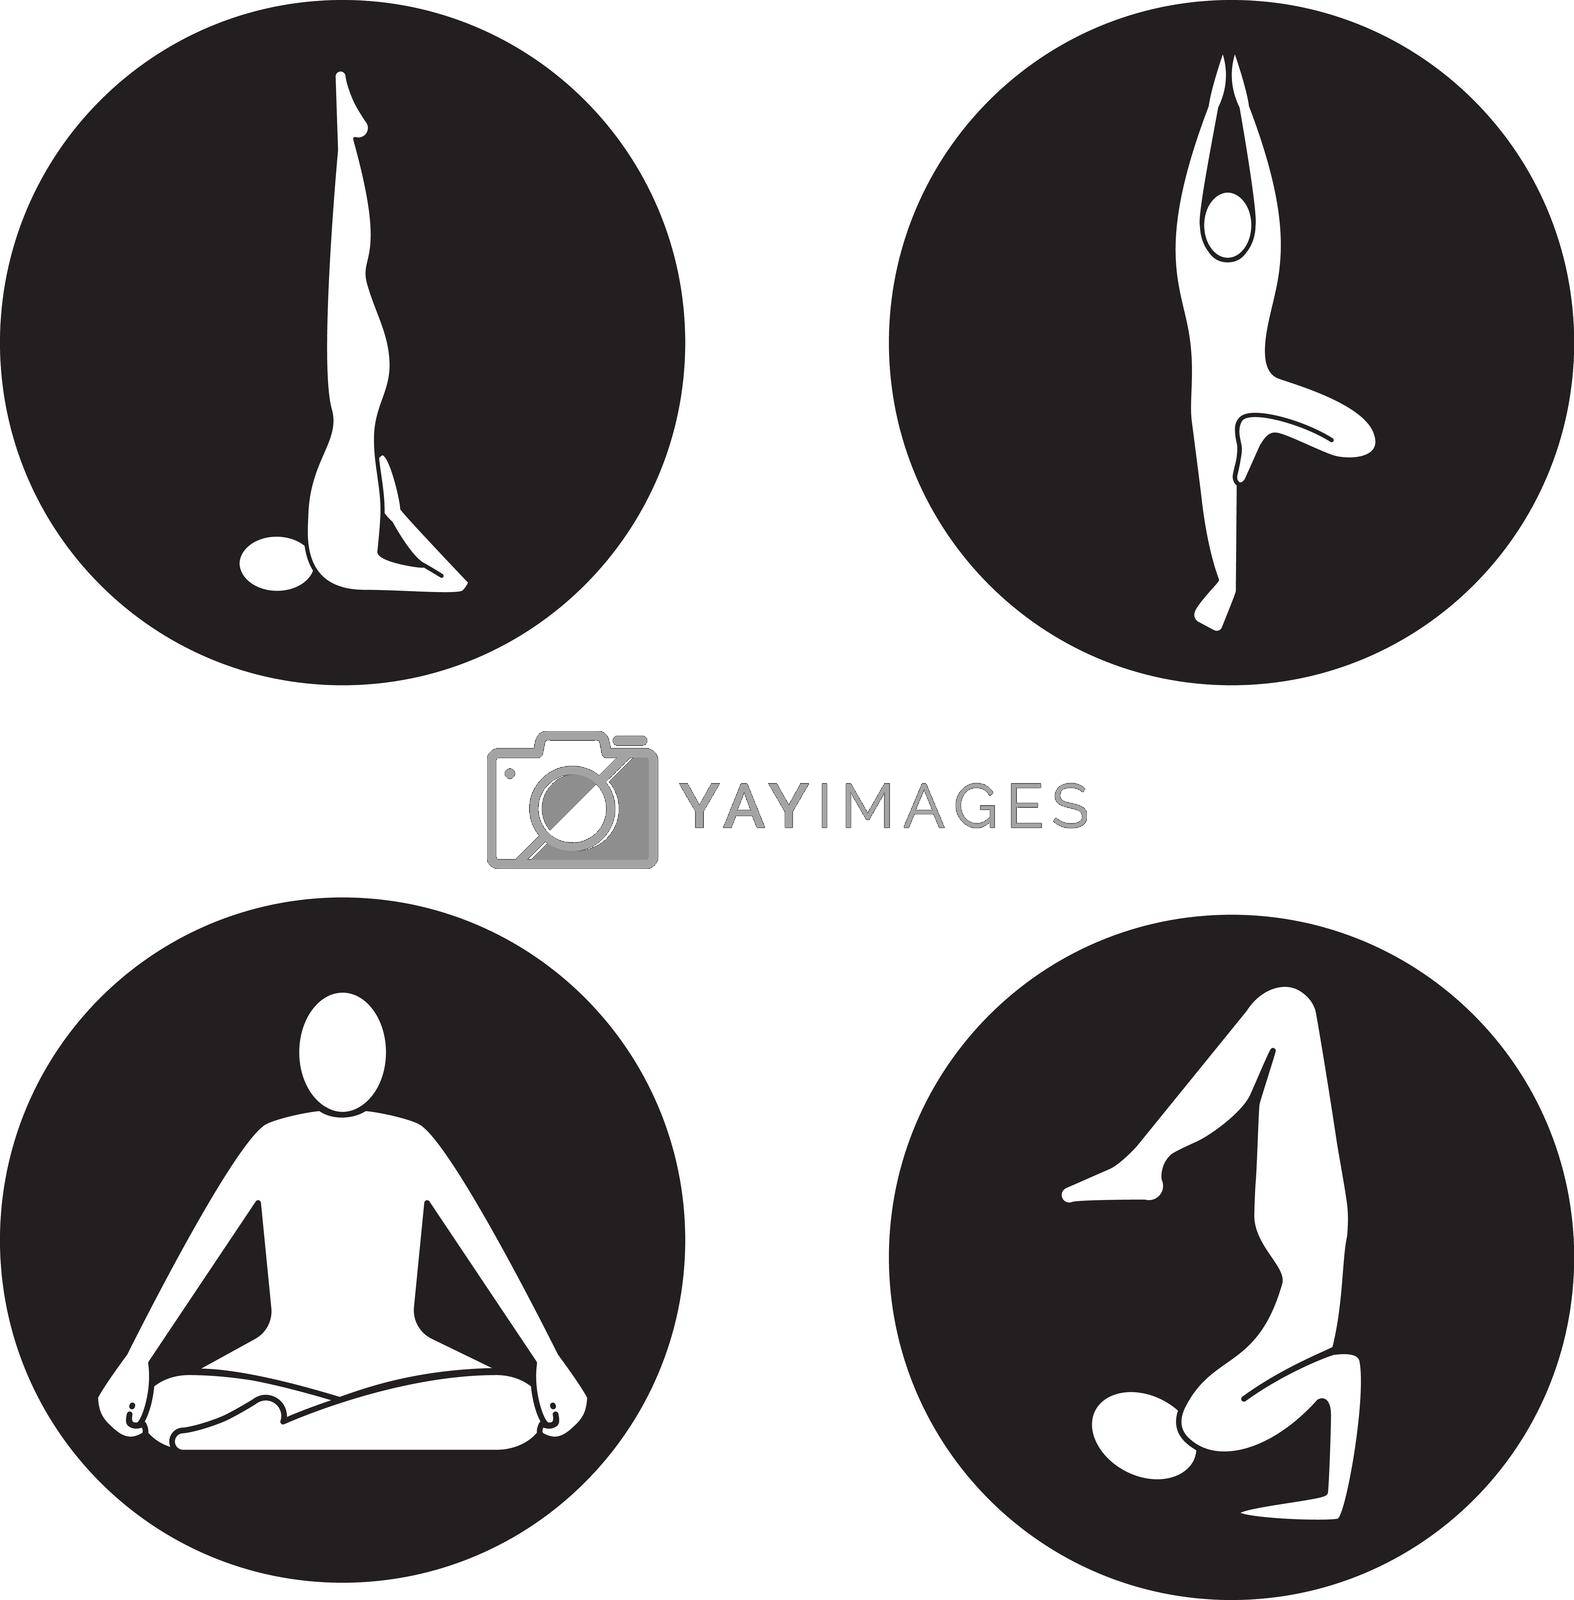 Yoga asanas icons set. Sarvangasana, vrikshasana, siddhasana, vrishchikasana yoga positions. Vector white silhouettes illustrations in black circles